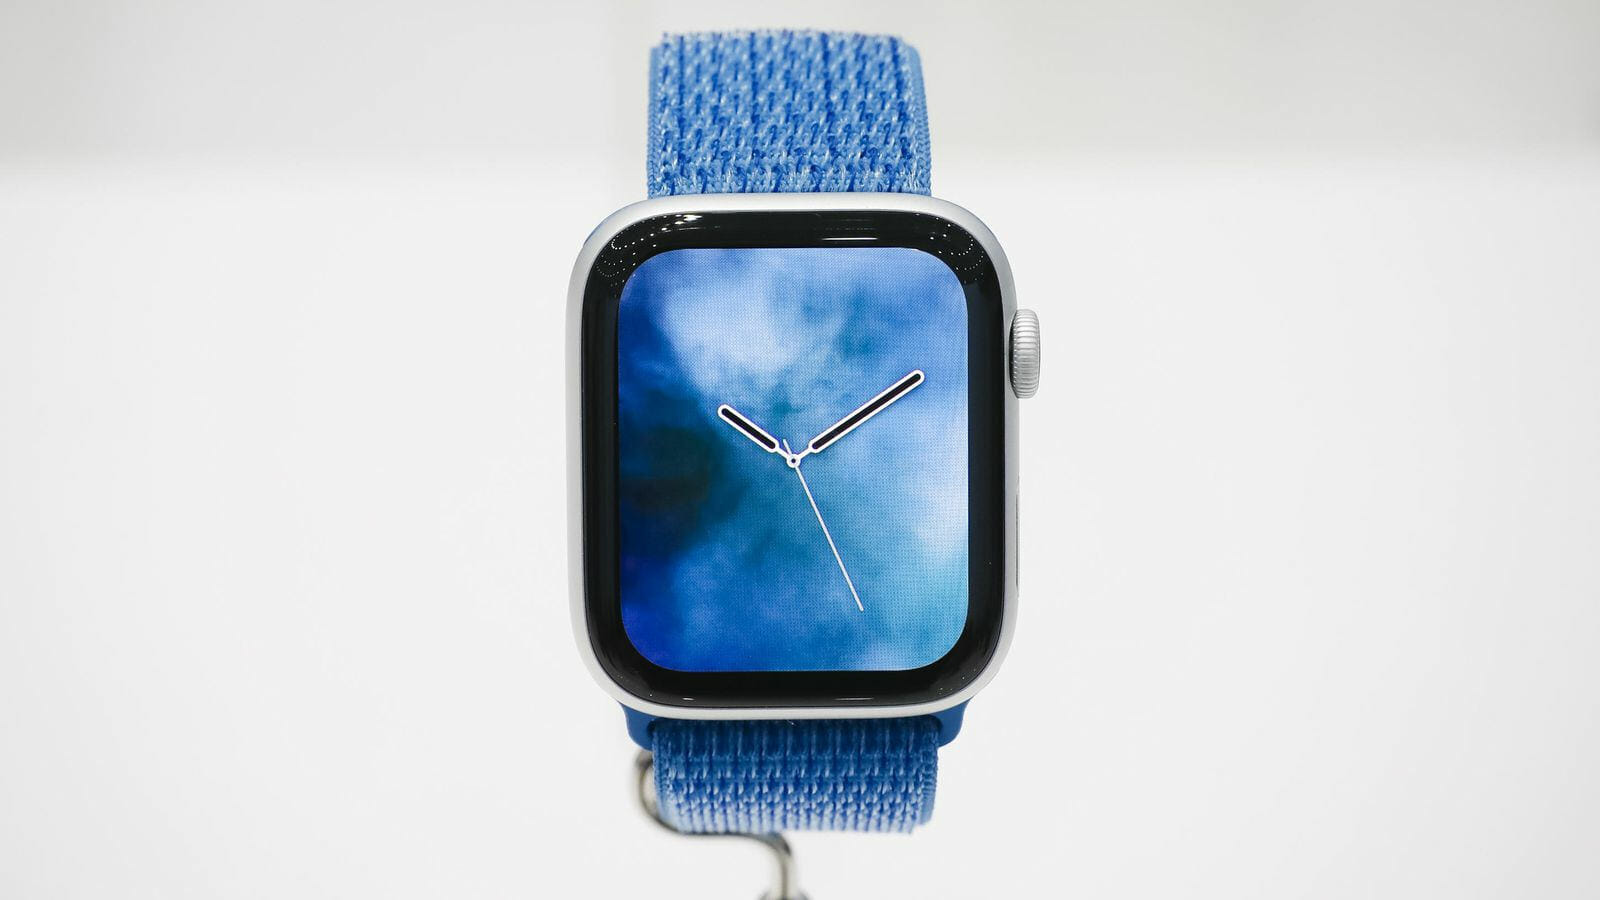 A blue Apple Watch 4, courtesy toolstotal.com